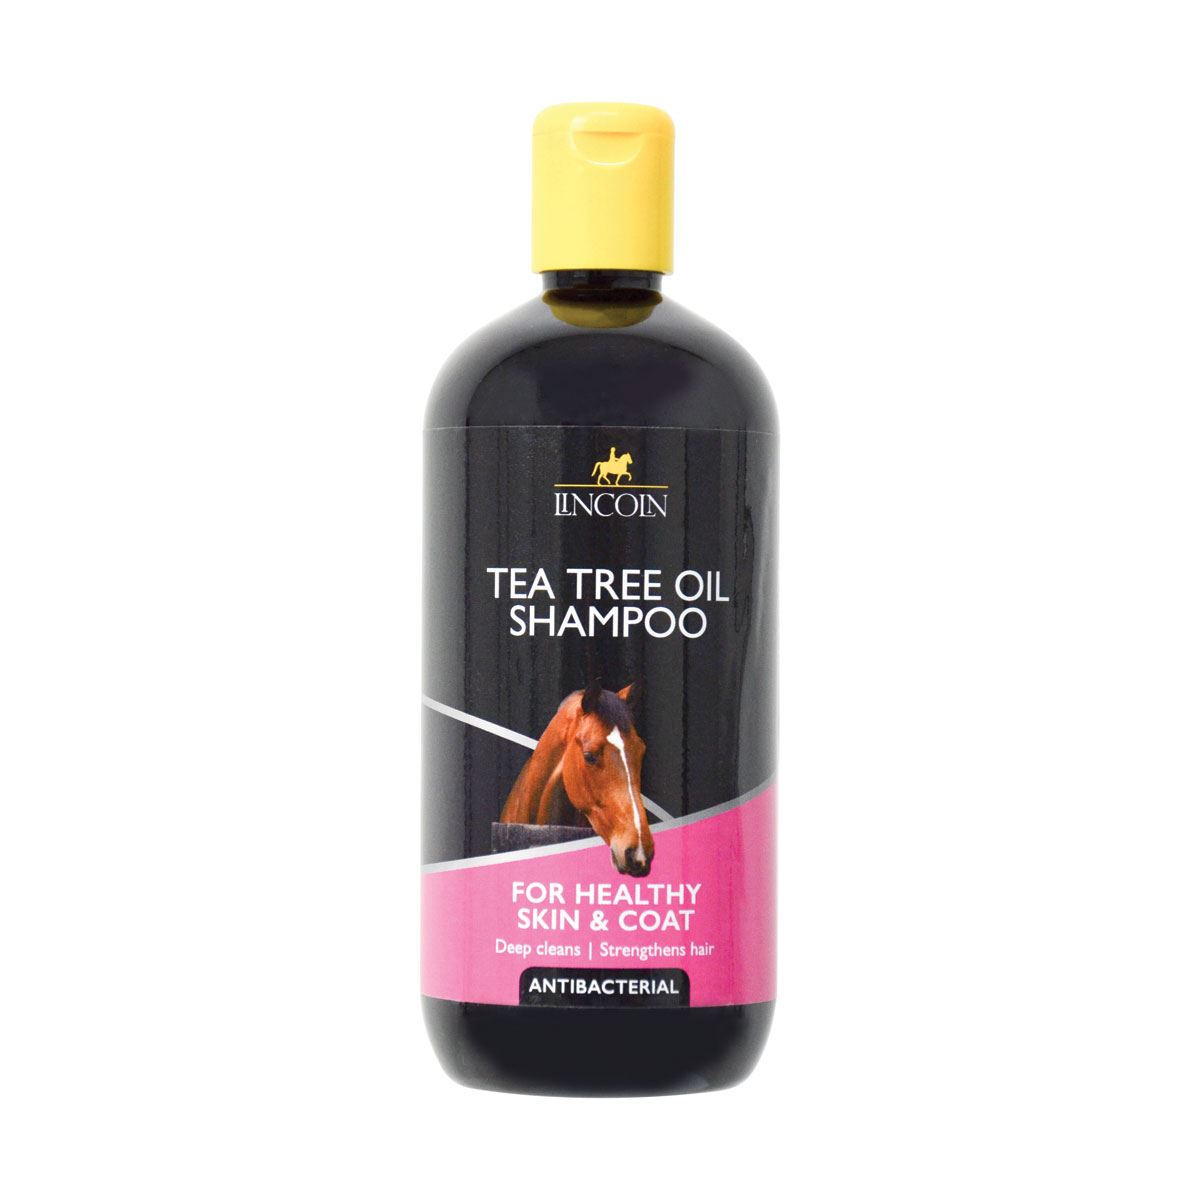 Lincoln Tea Tree Oil Shampoo - Just Horse Riders